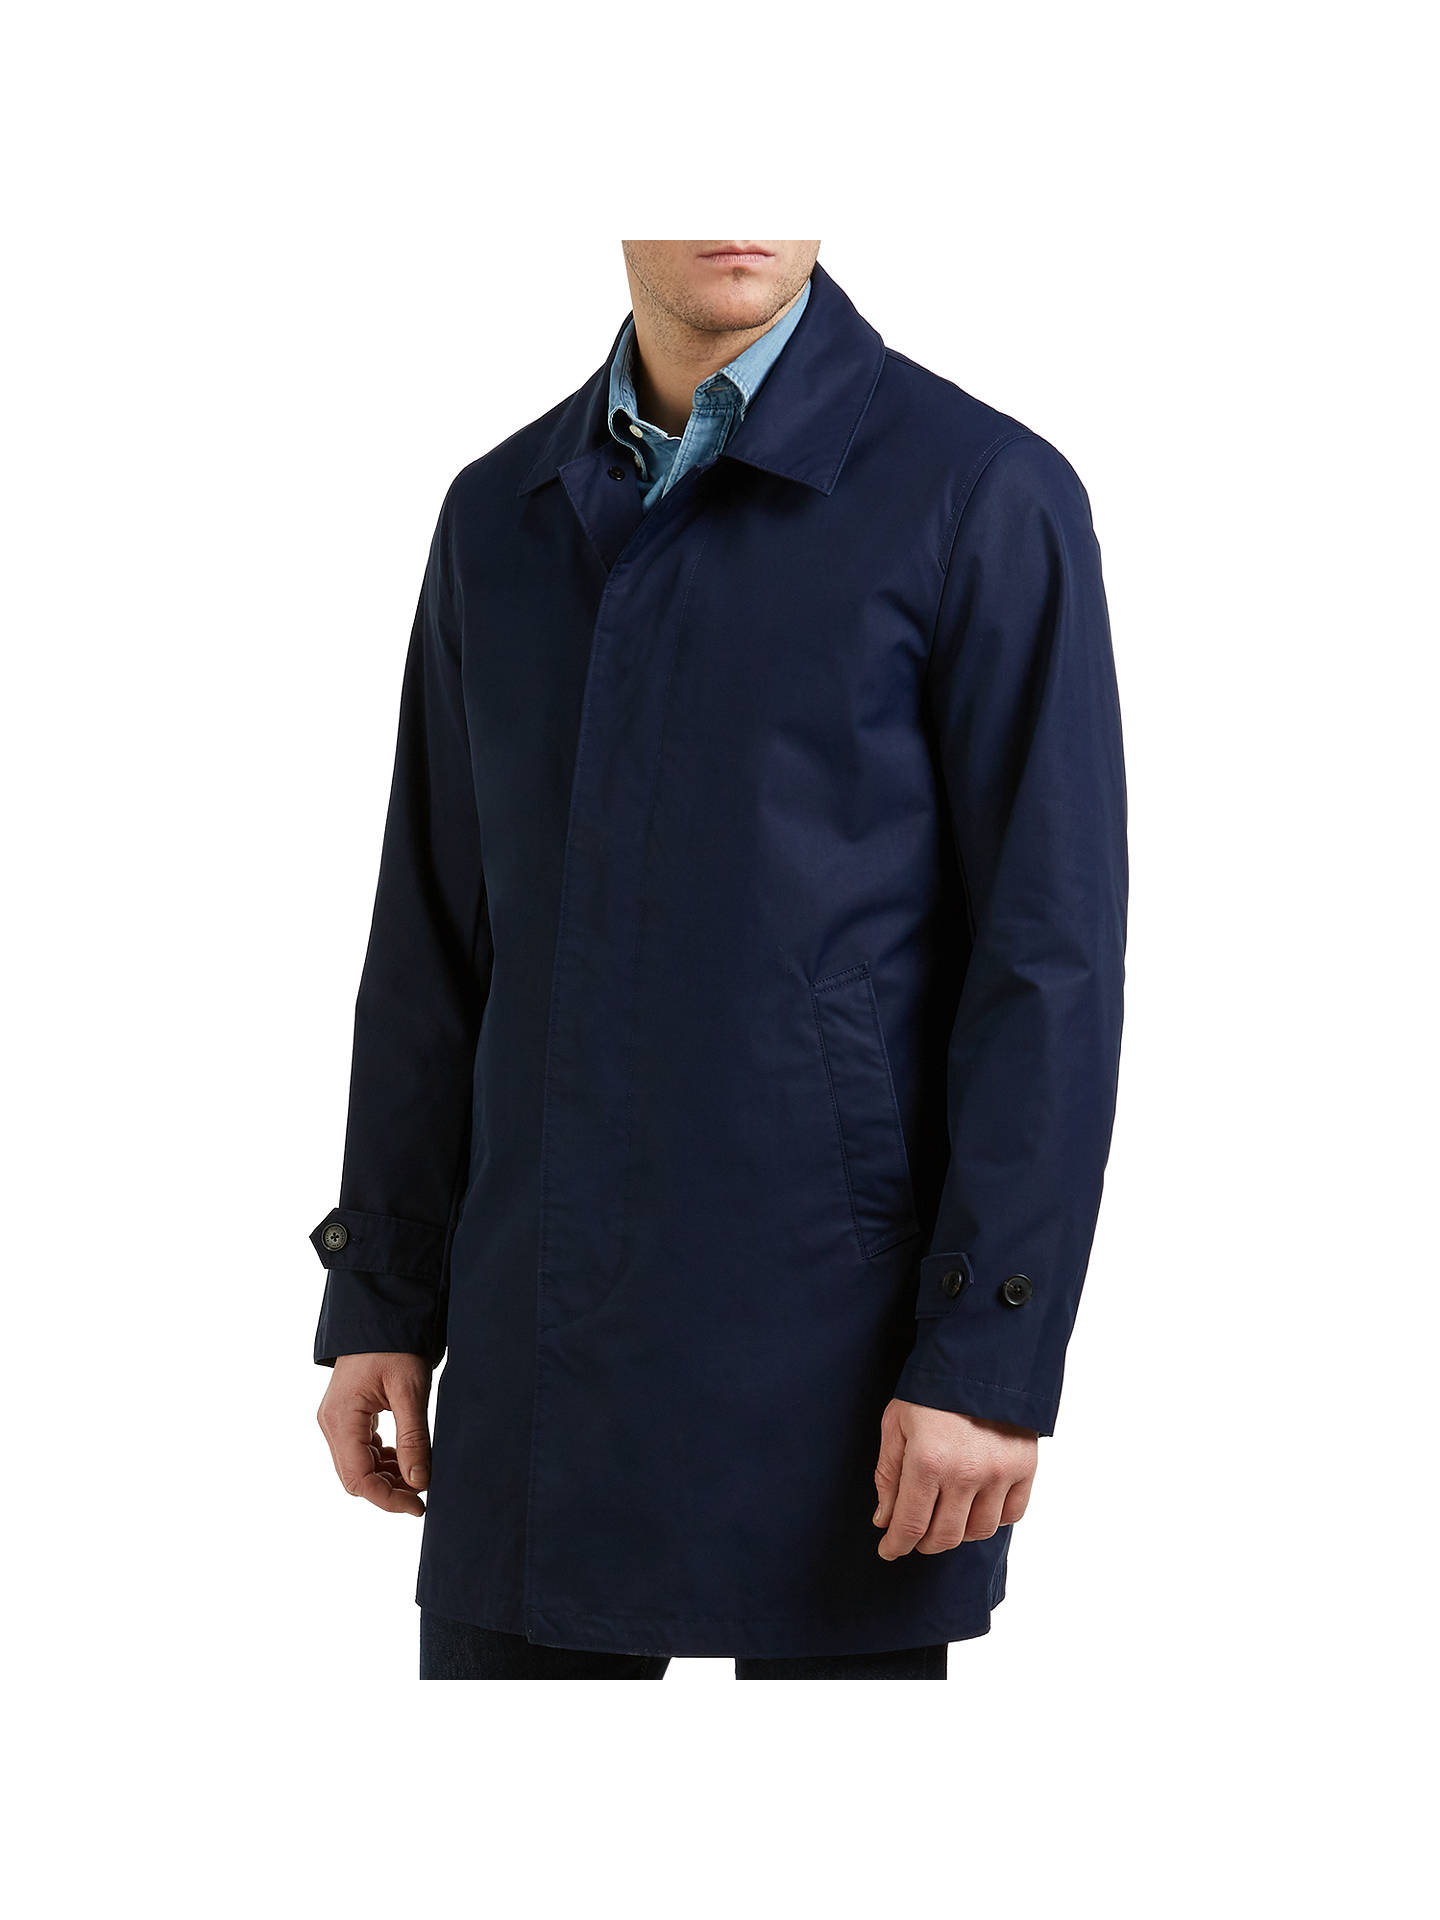 Gant 'The Raincoat', Navy at John Lewis & Partners